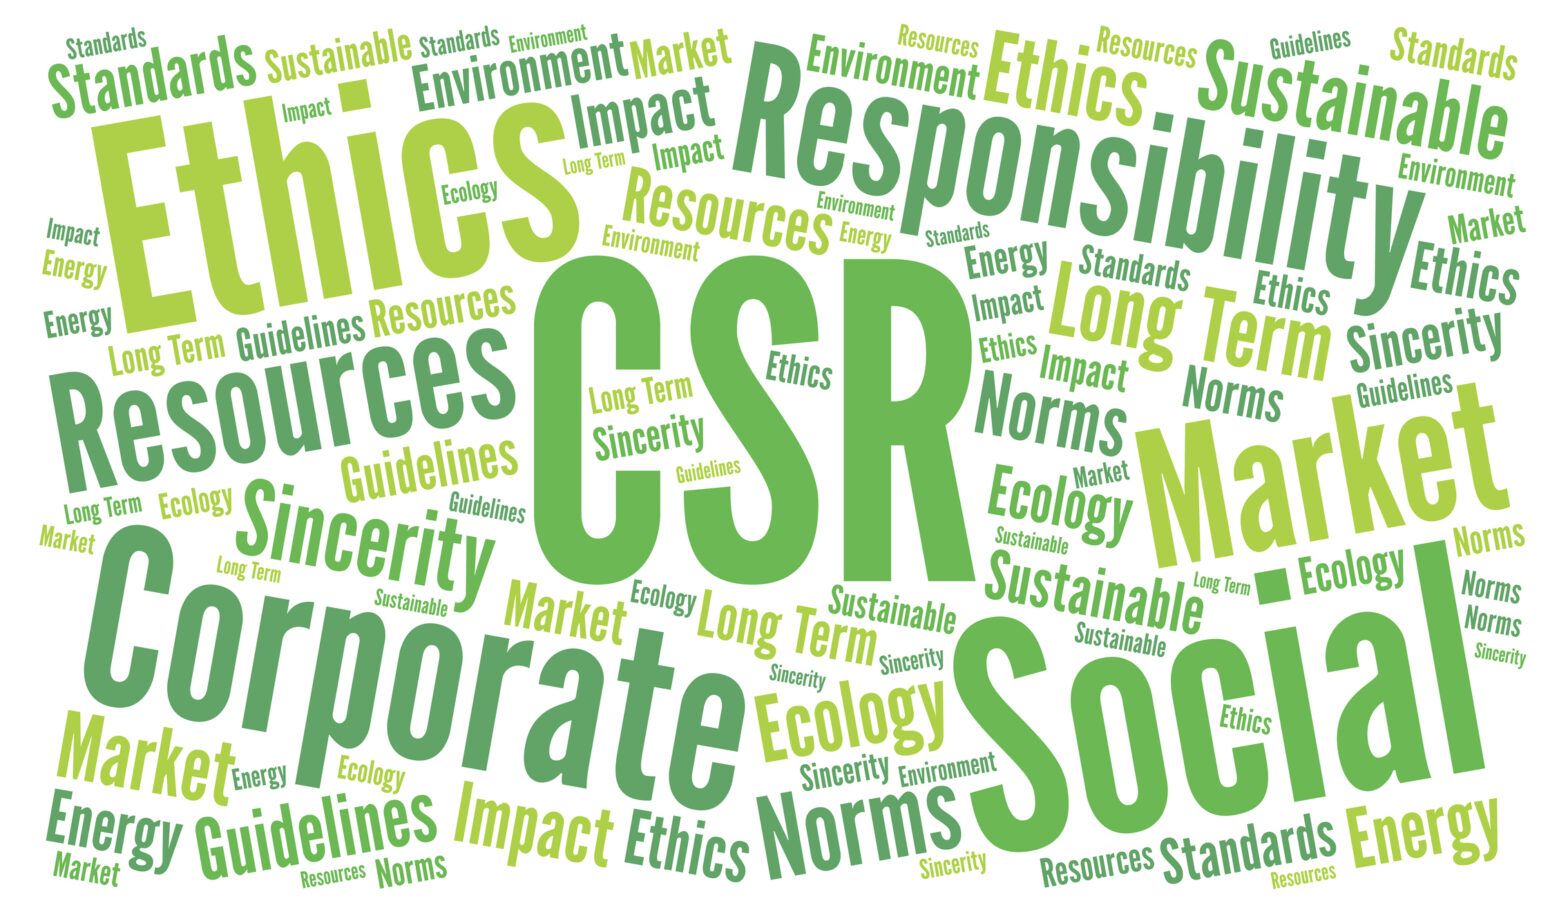 Distinguishing ESG, sustainability and impact investing